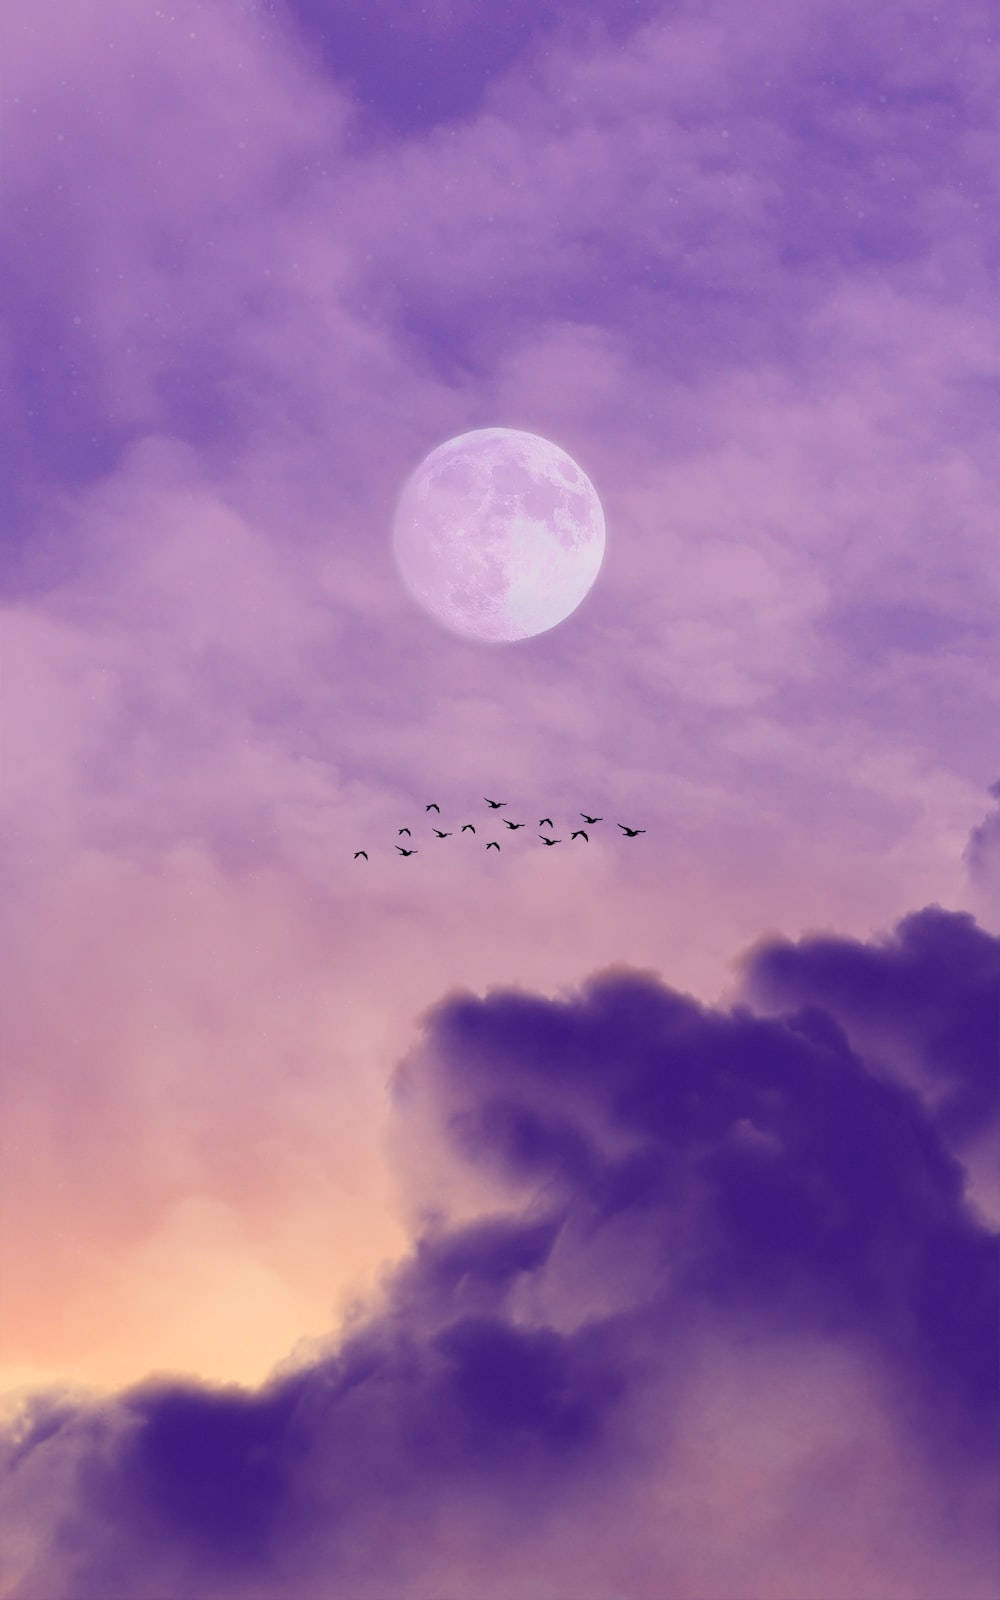 A flock of birds flying under the full moon - Light purple, May